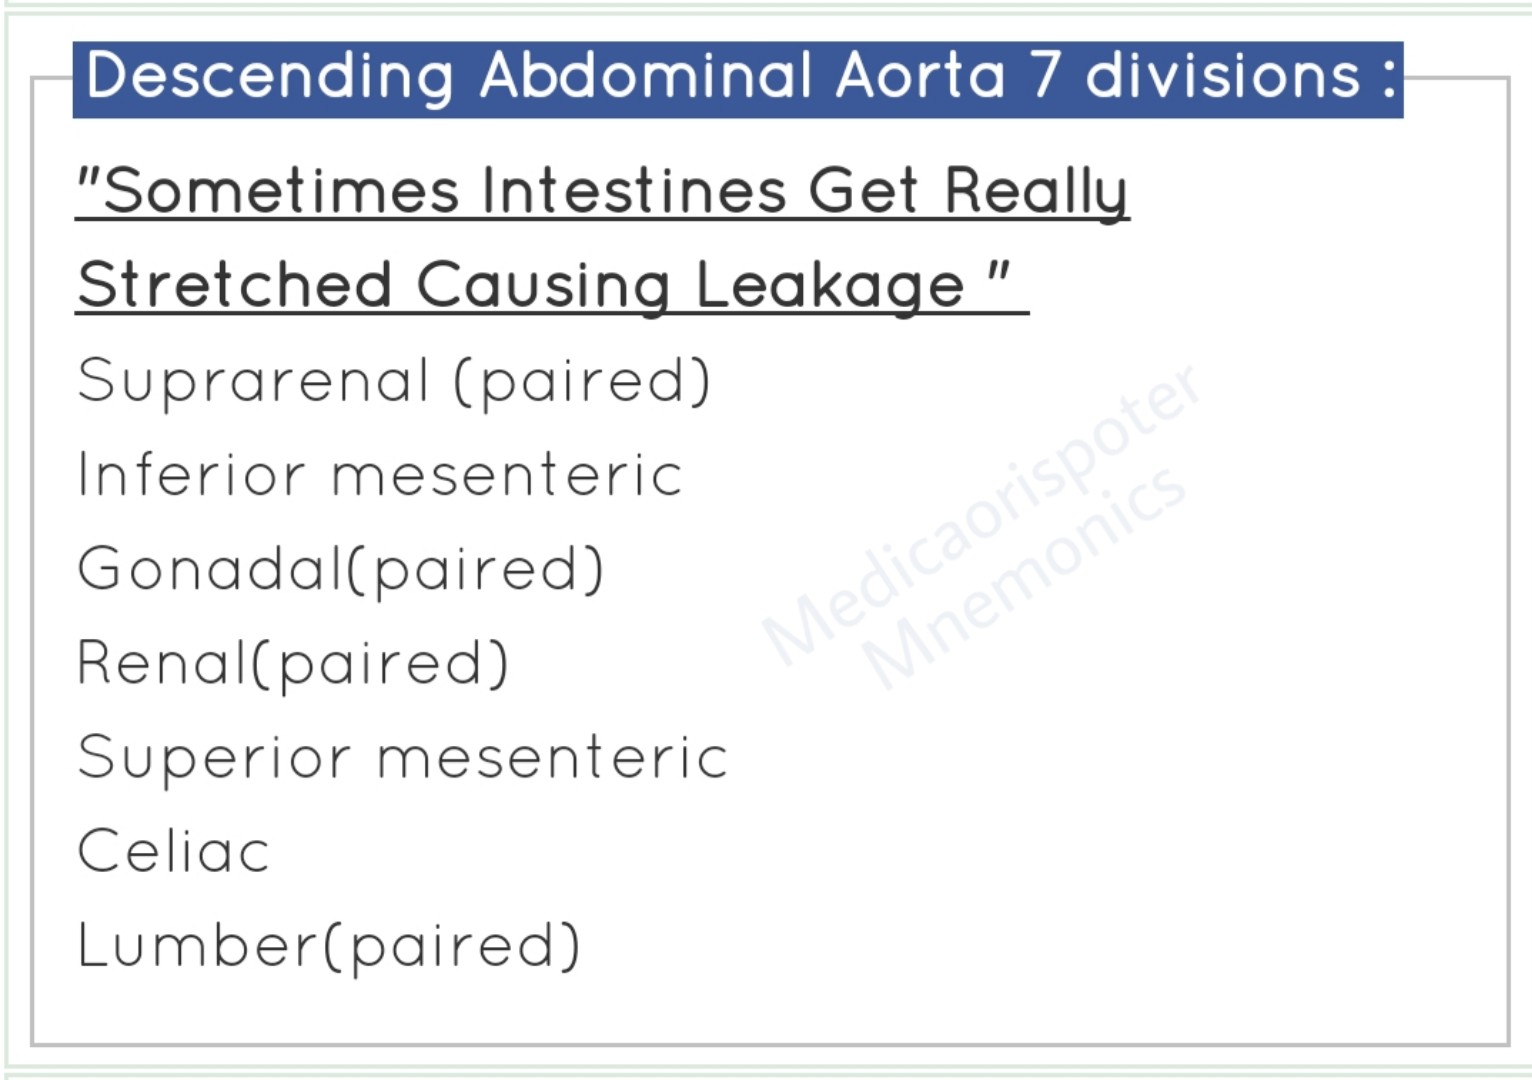 Divisions of Descending Abdominal Aorta